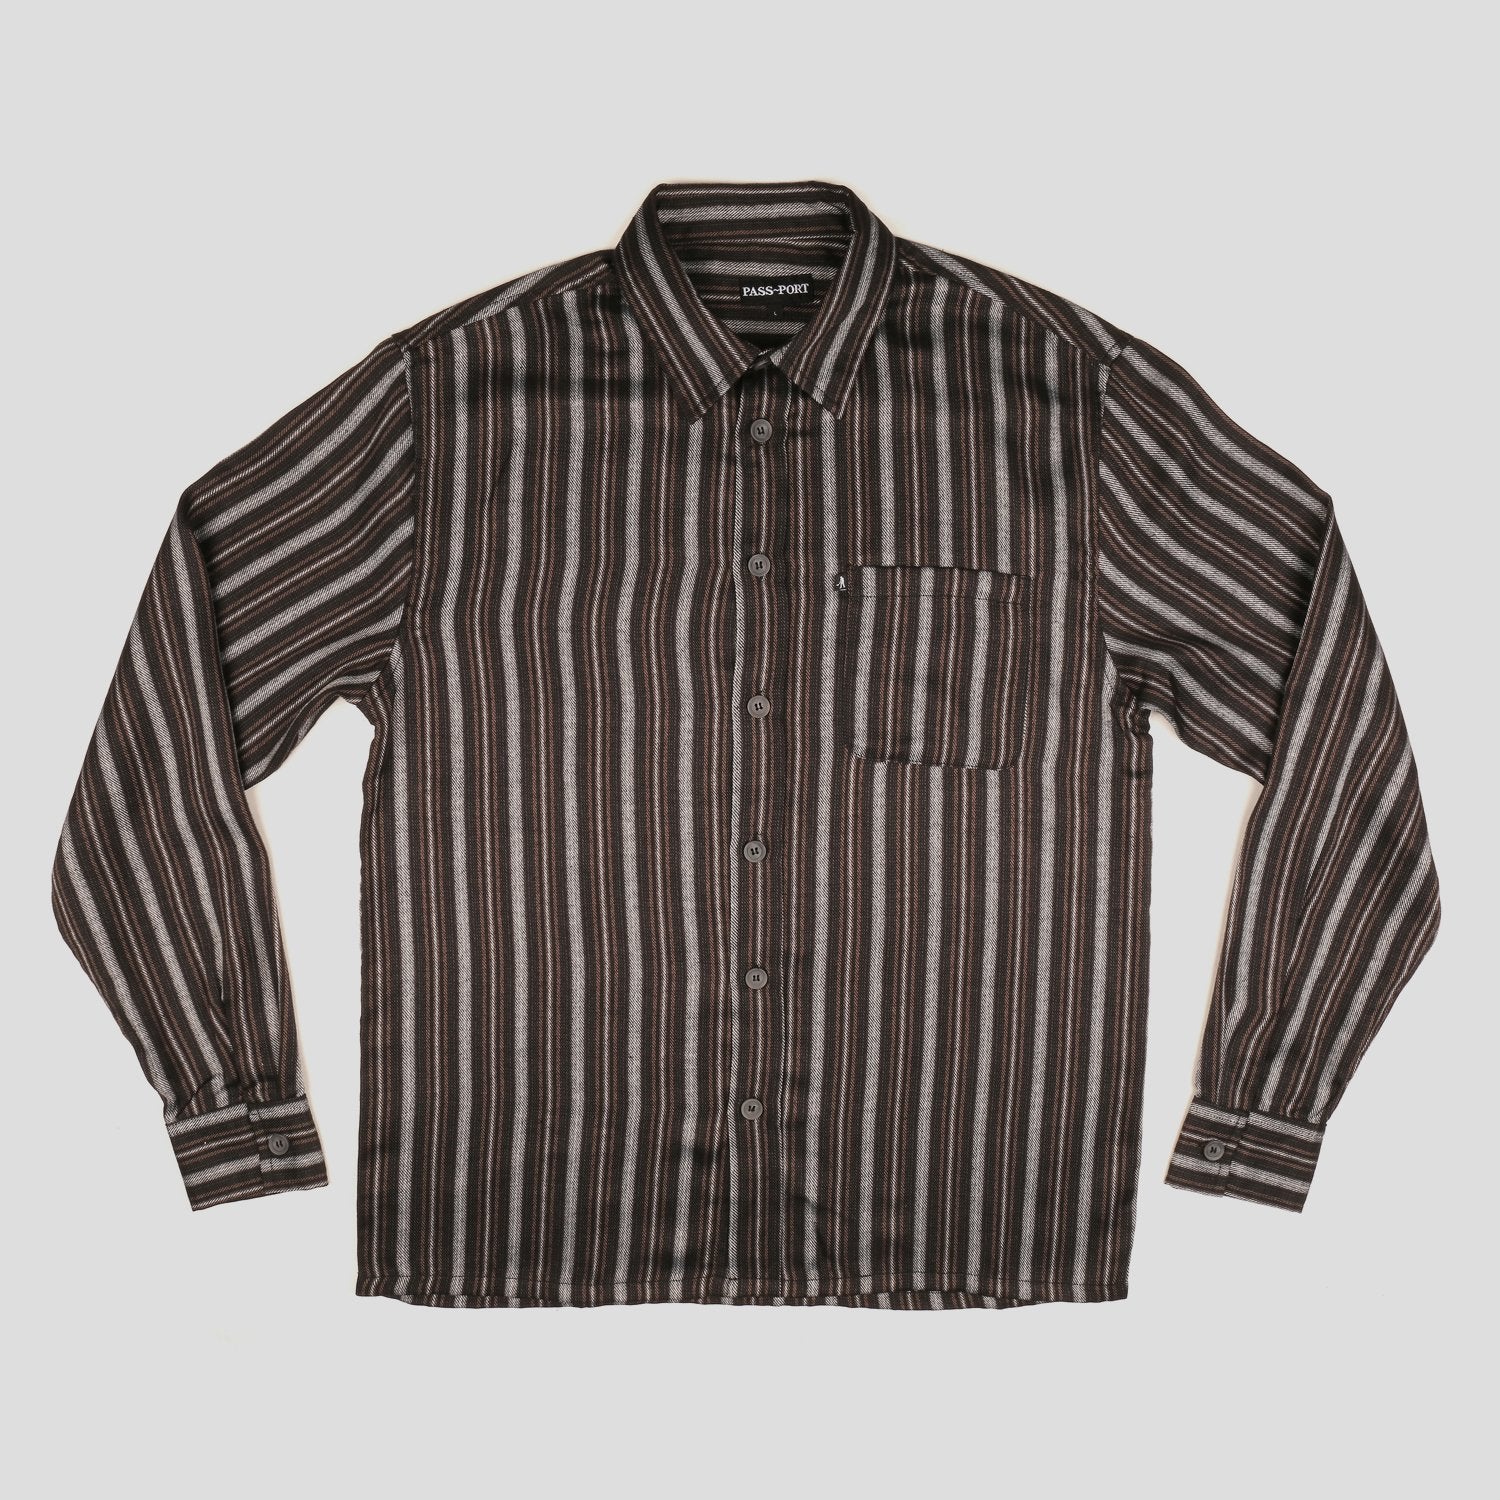 Workers Stripe Shirts - Longsleeve (Black)